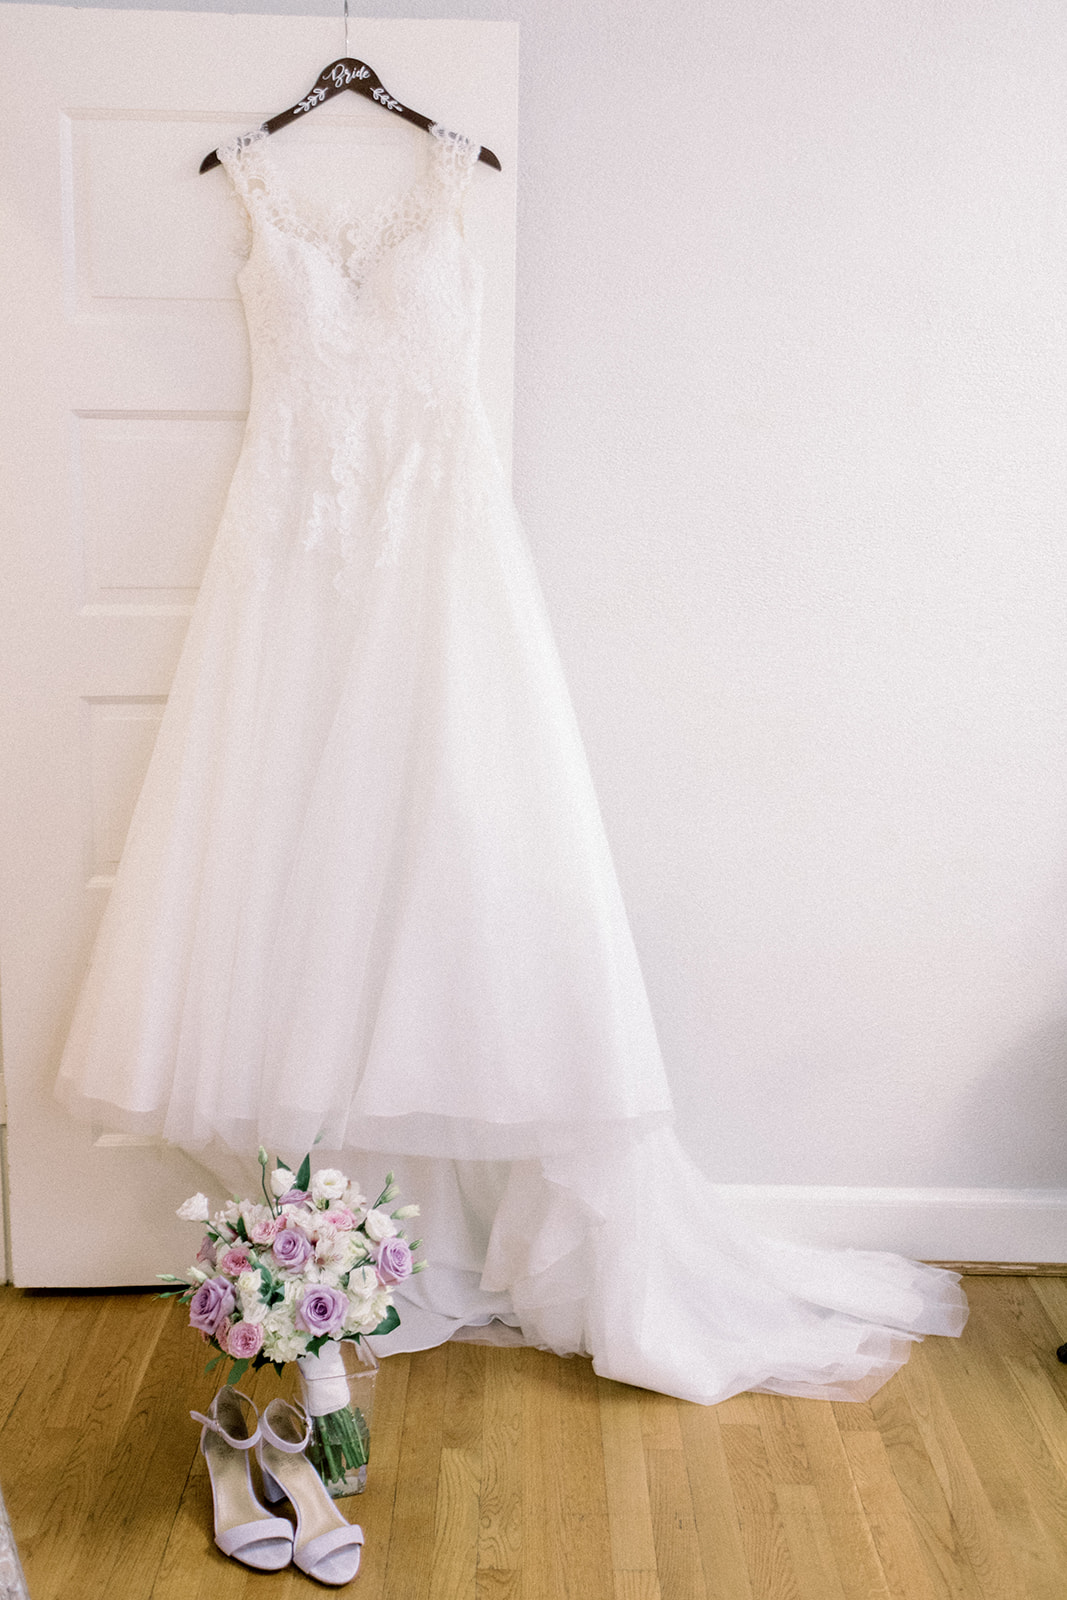 Pennsylvania wedding photographer captures wedding dress hanging